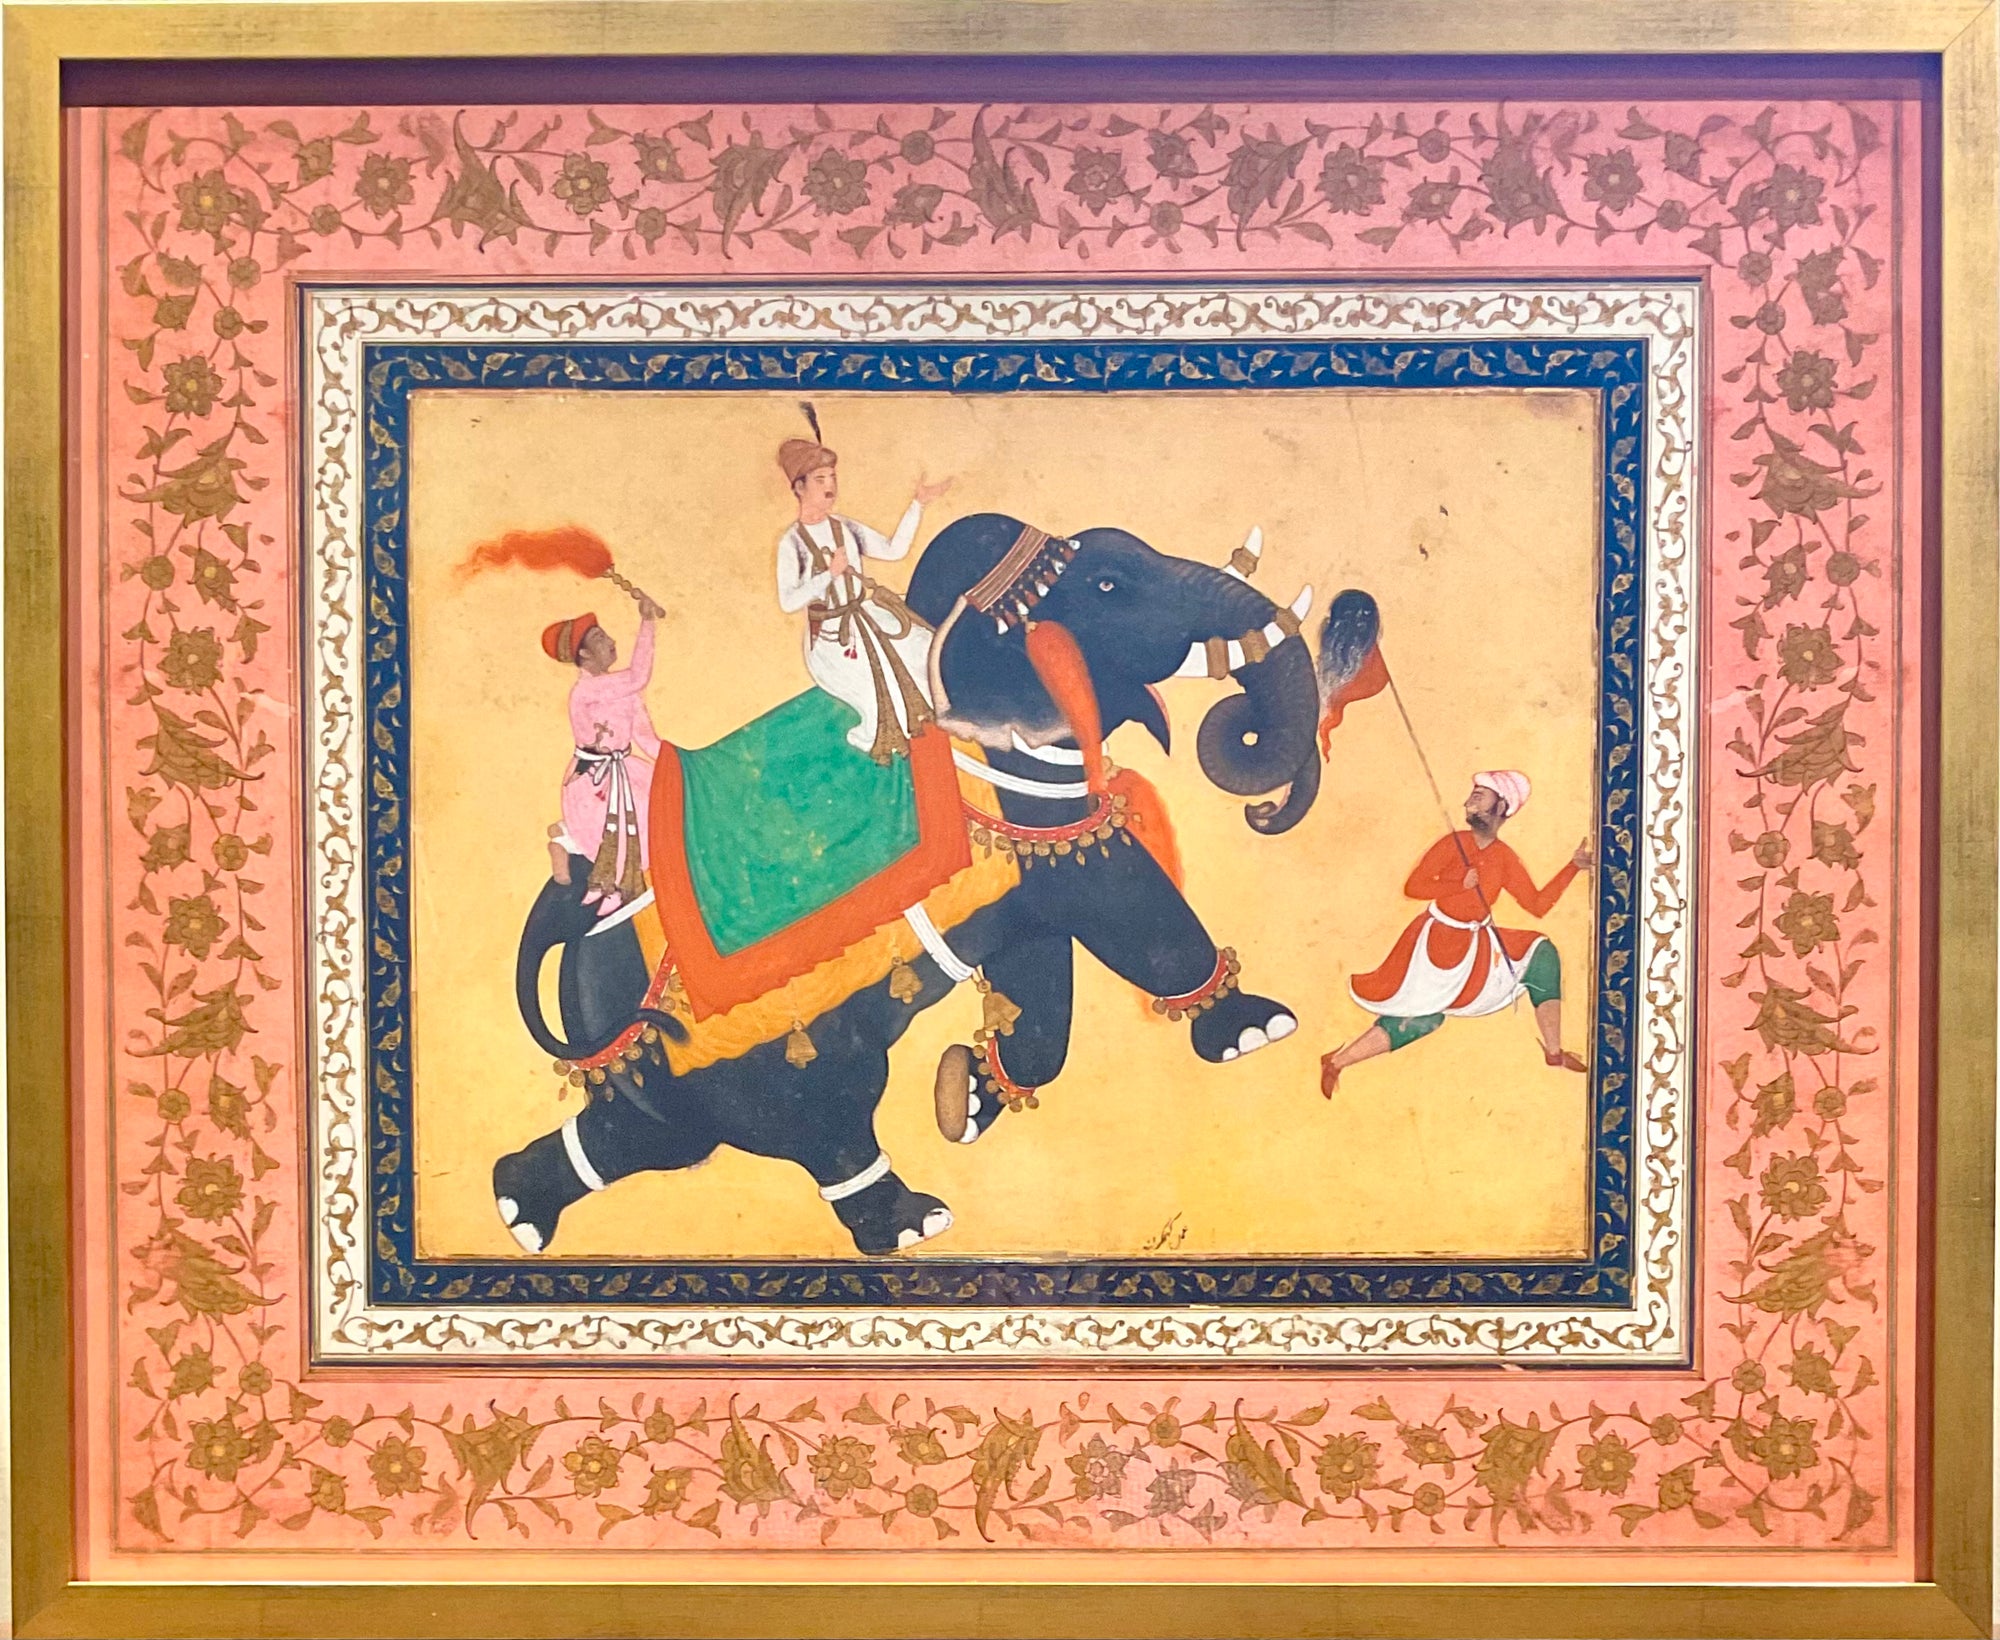 Prince Riding Elephant (Right Facing)